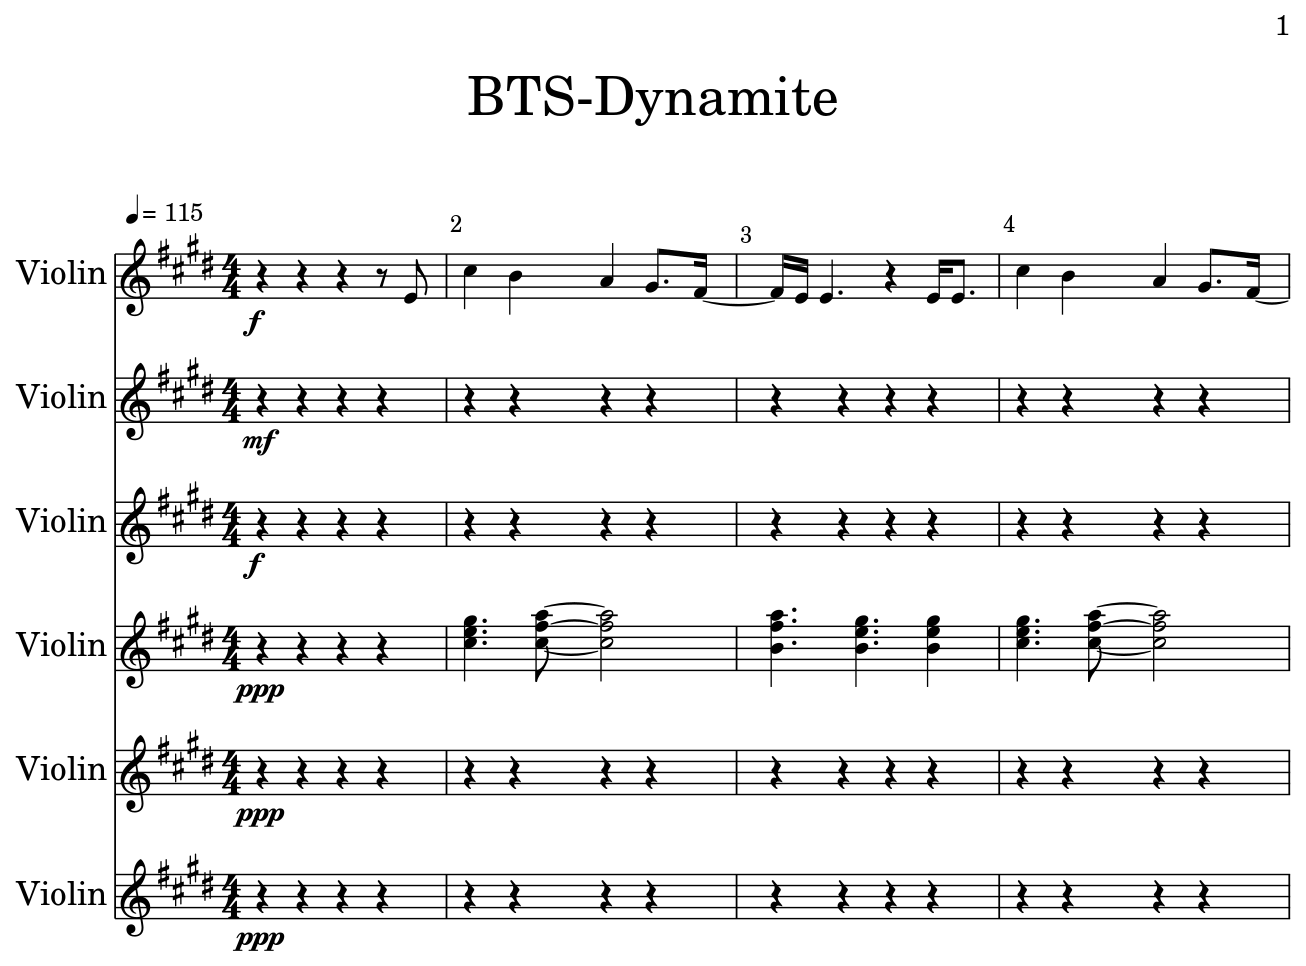 BTS-Dynamite - Sheet music for Violin.